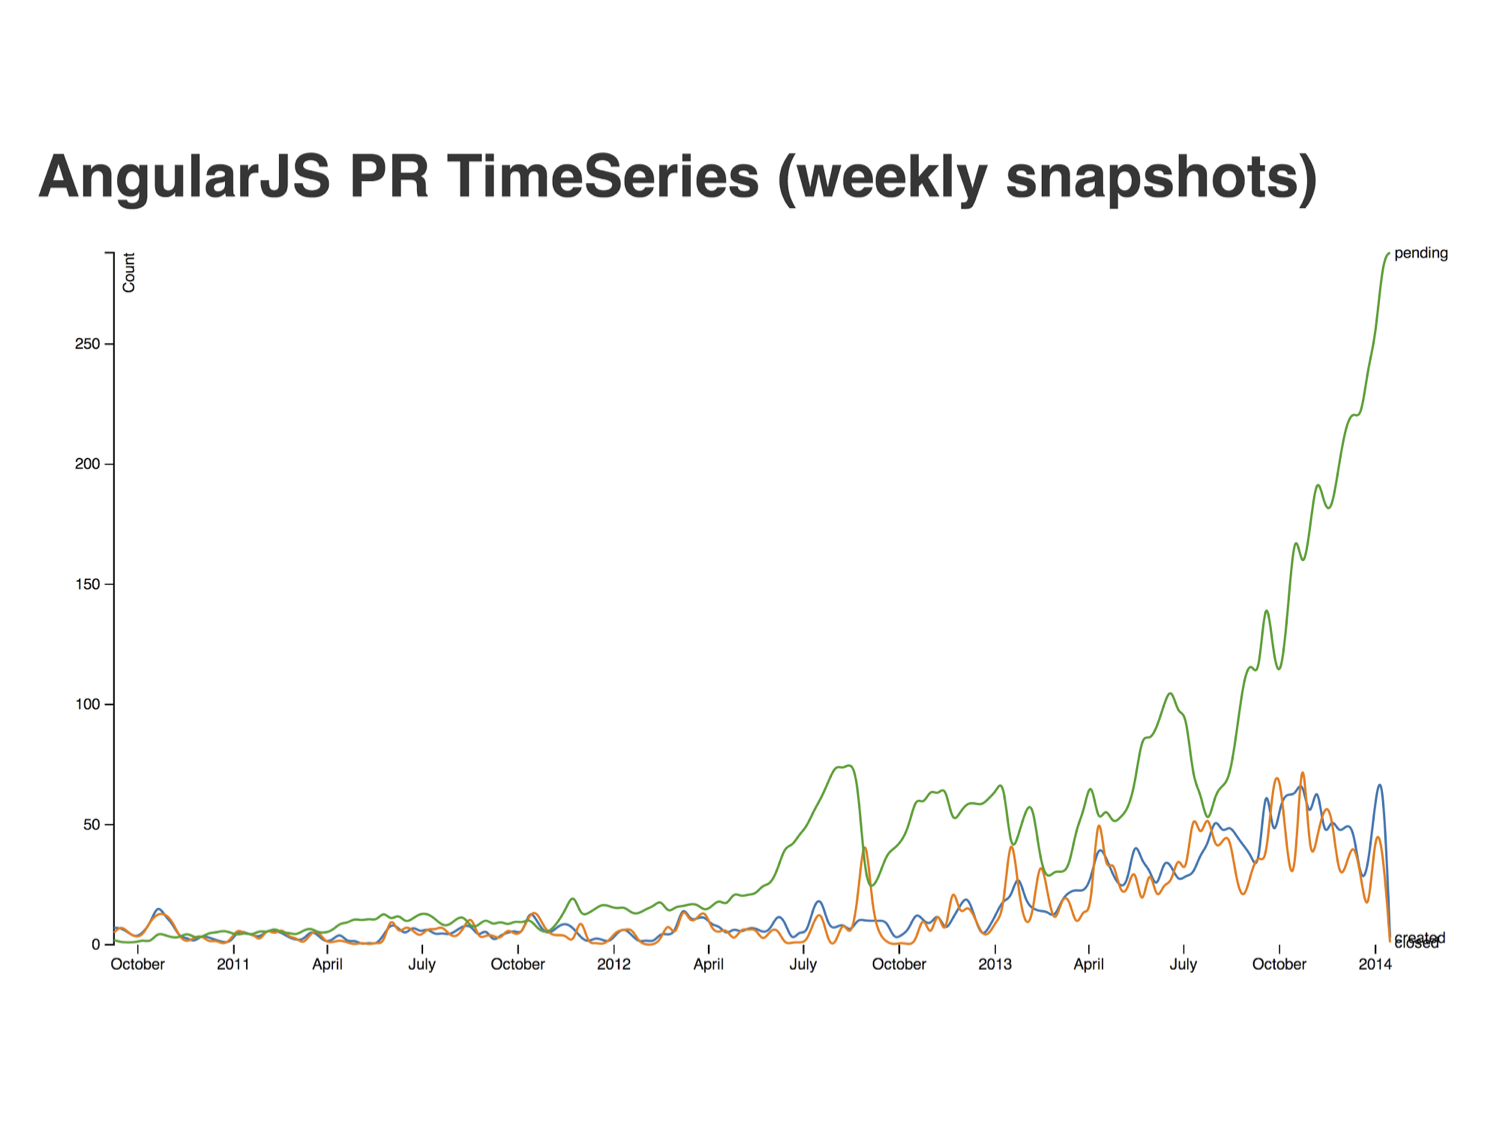 Pending PRs Graph